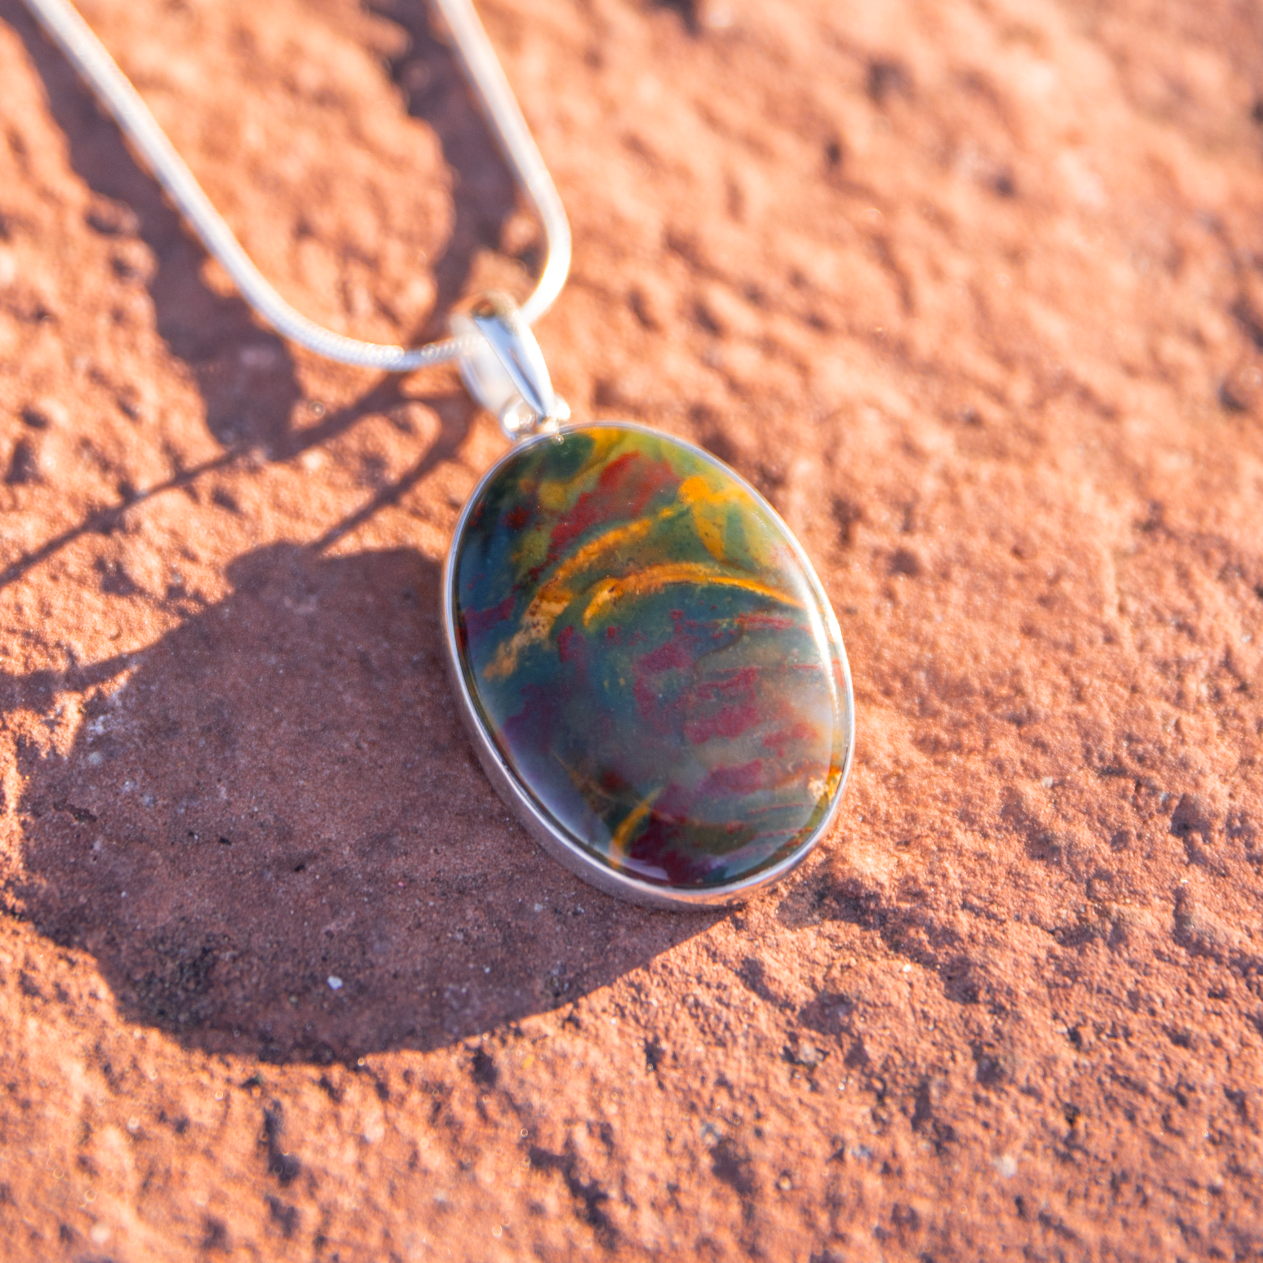 crystal jewelry: bloodstone pendant in sedona, arizona used for energy healing